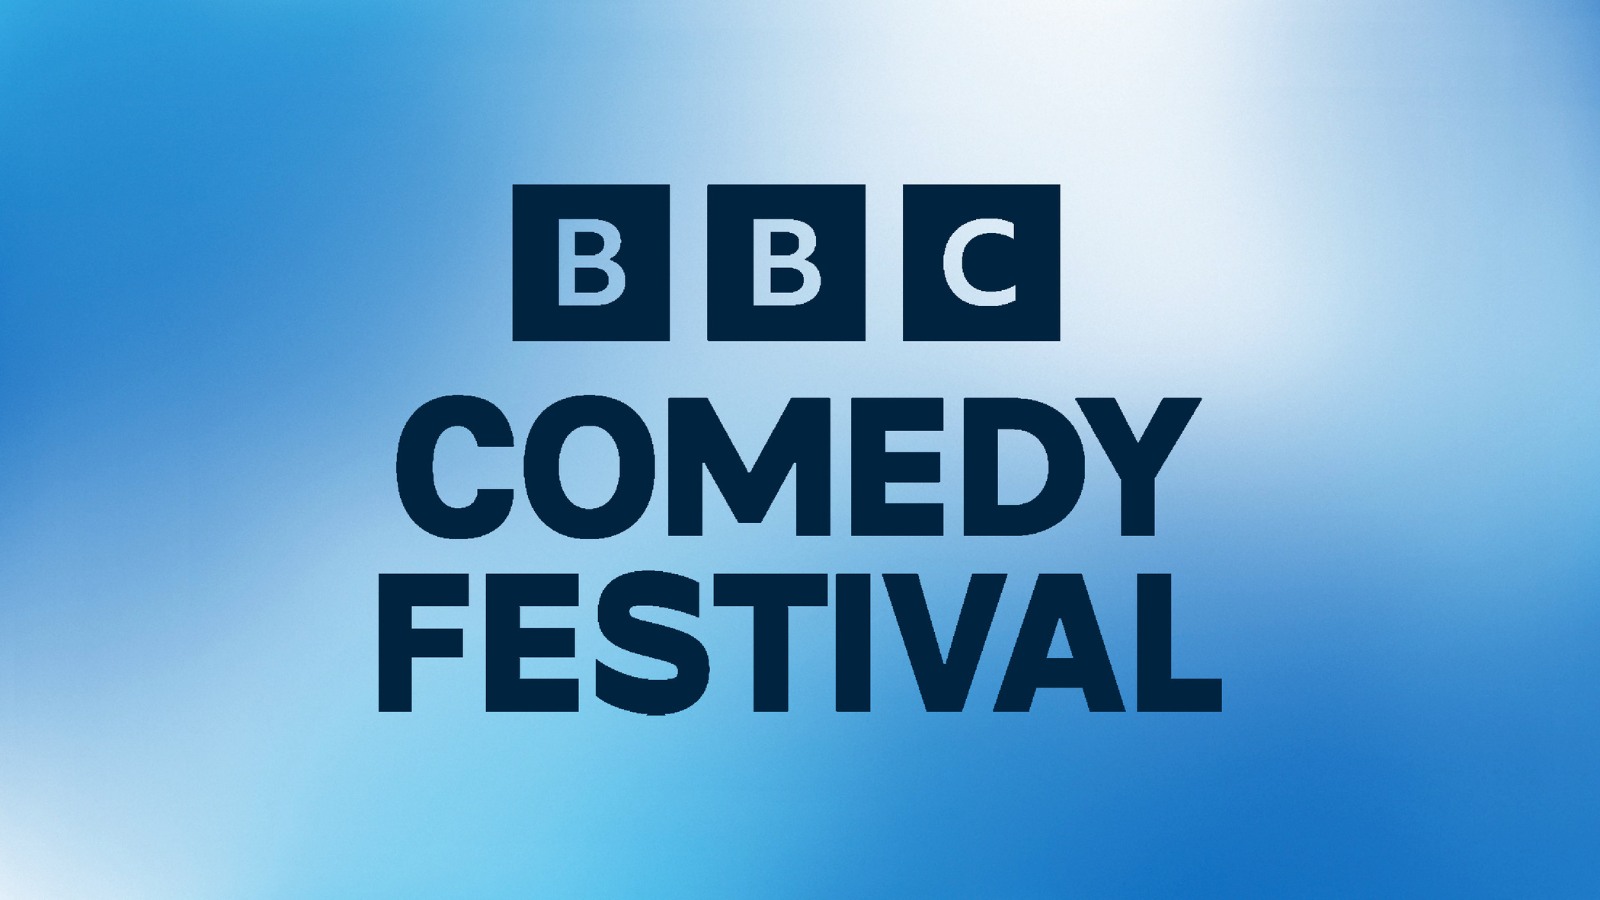 BBC Comedy Festival logo on blue background